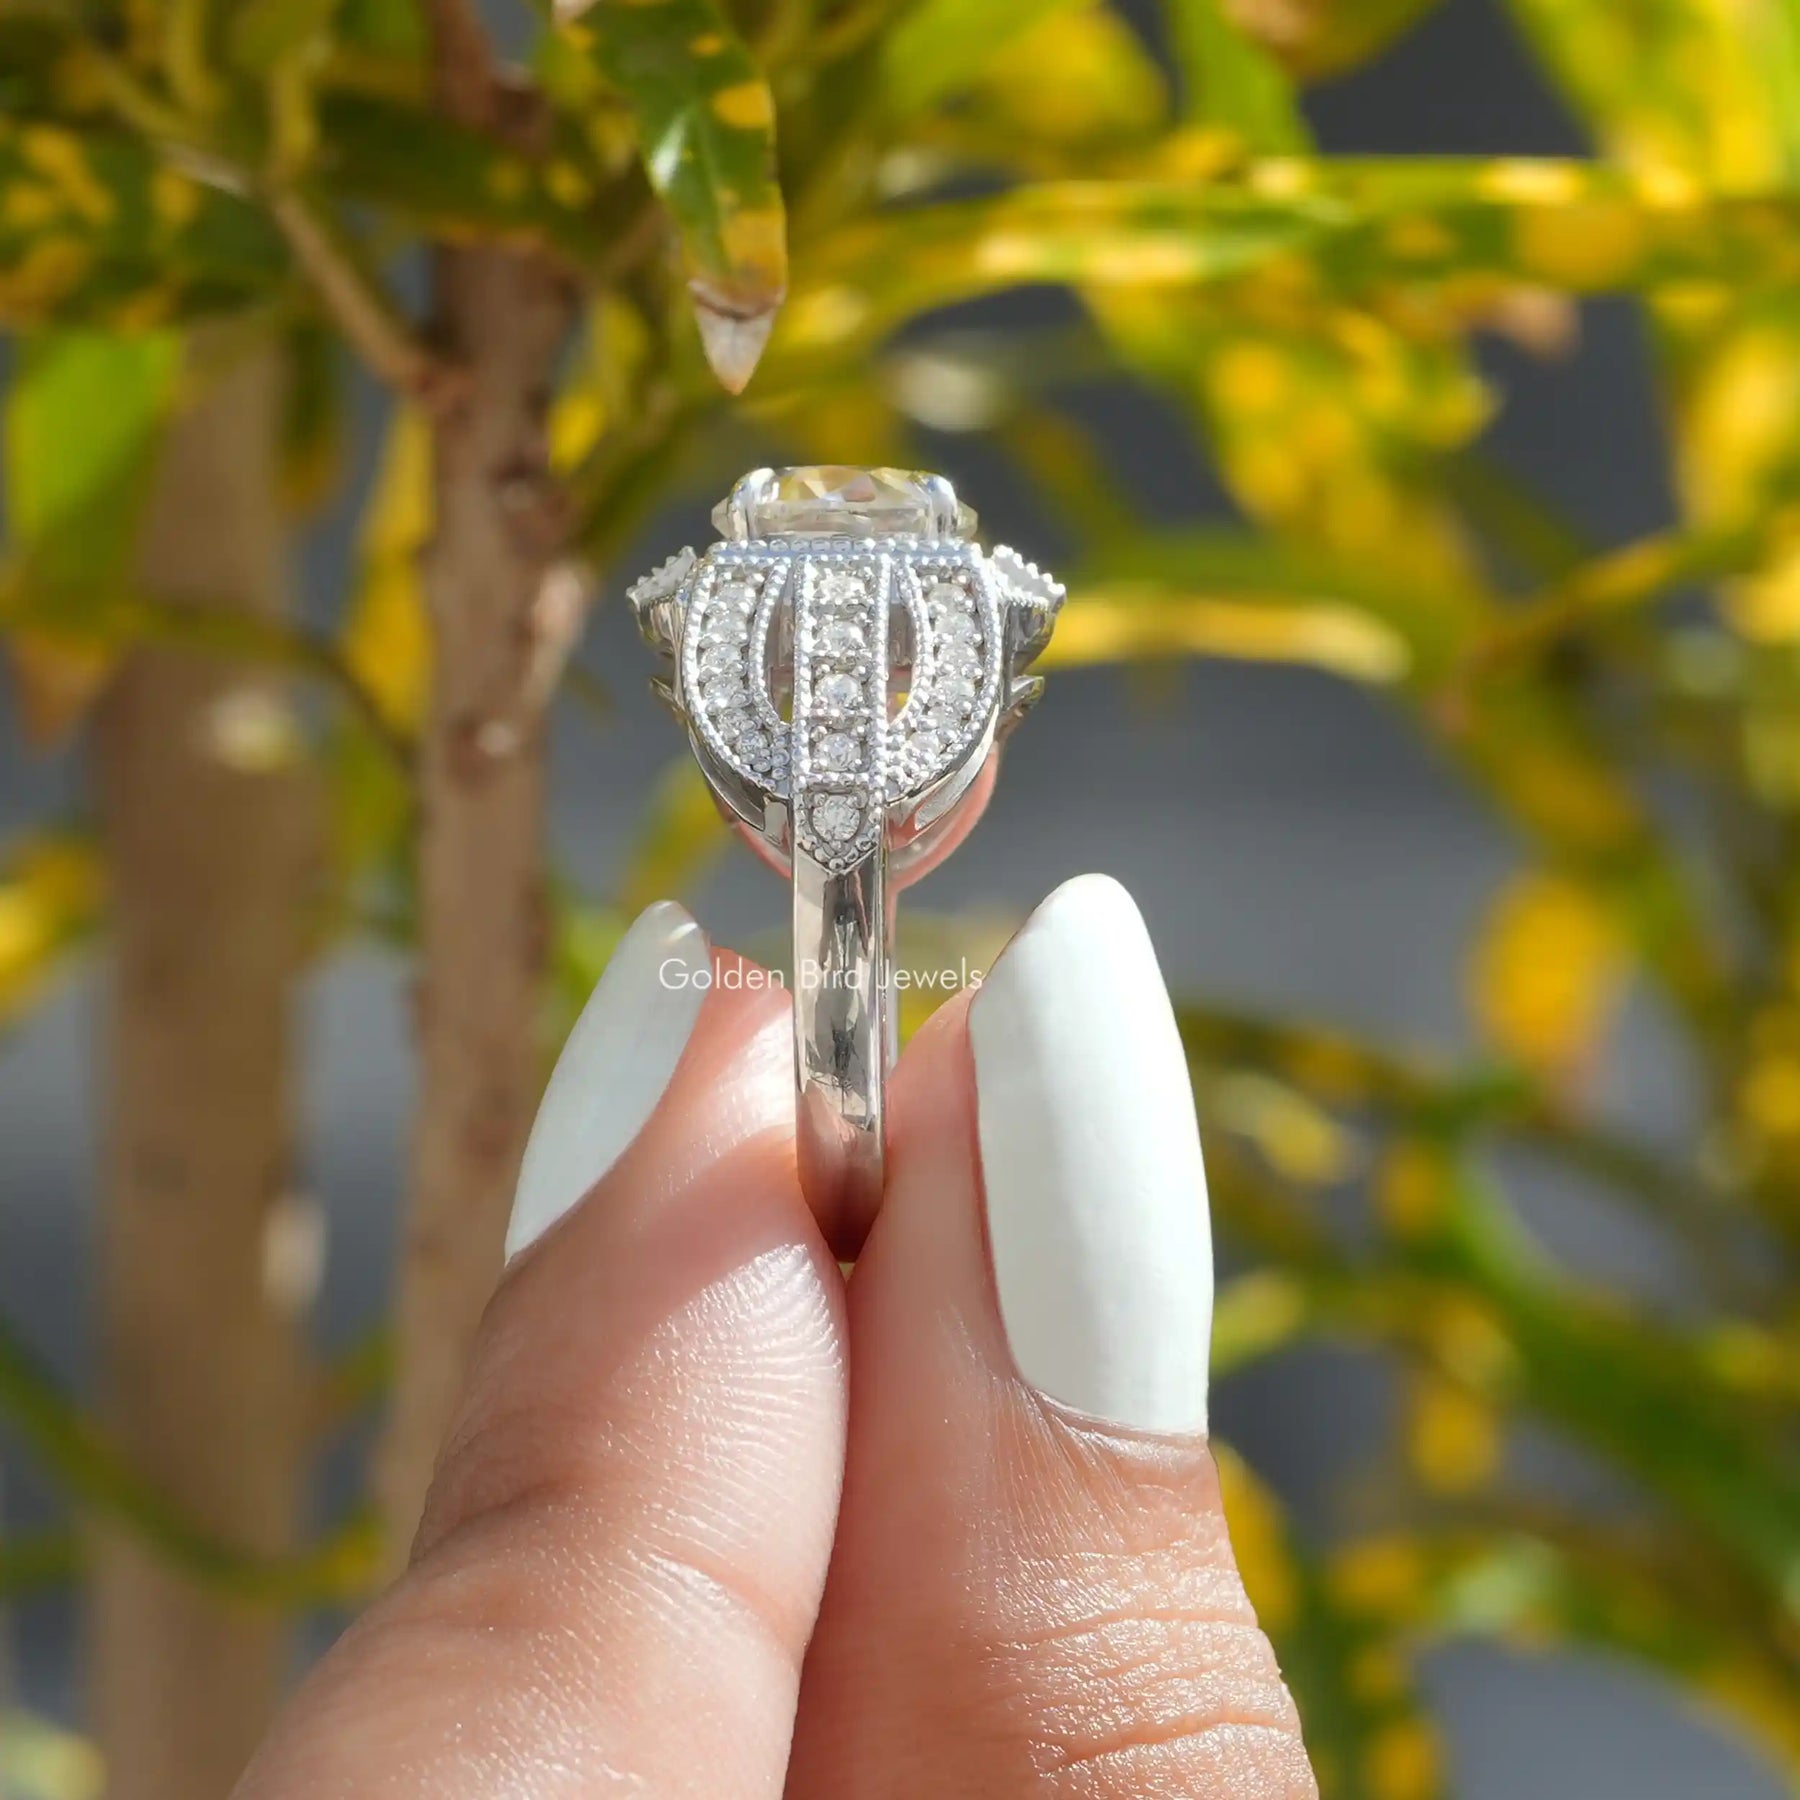 [Moissanite Round Cut Vintage Engagement Ring]-[Golden Bird Jewels]